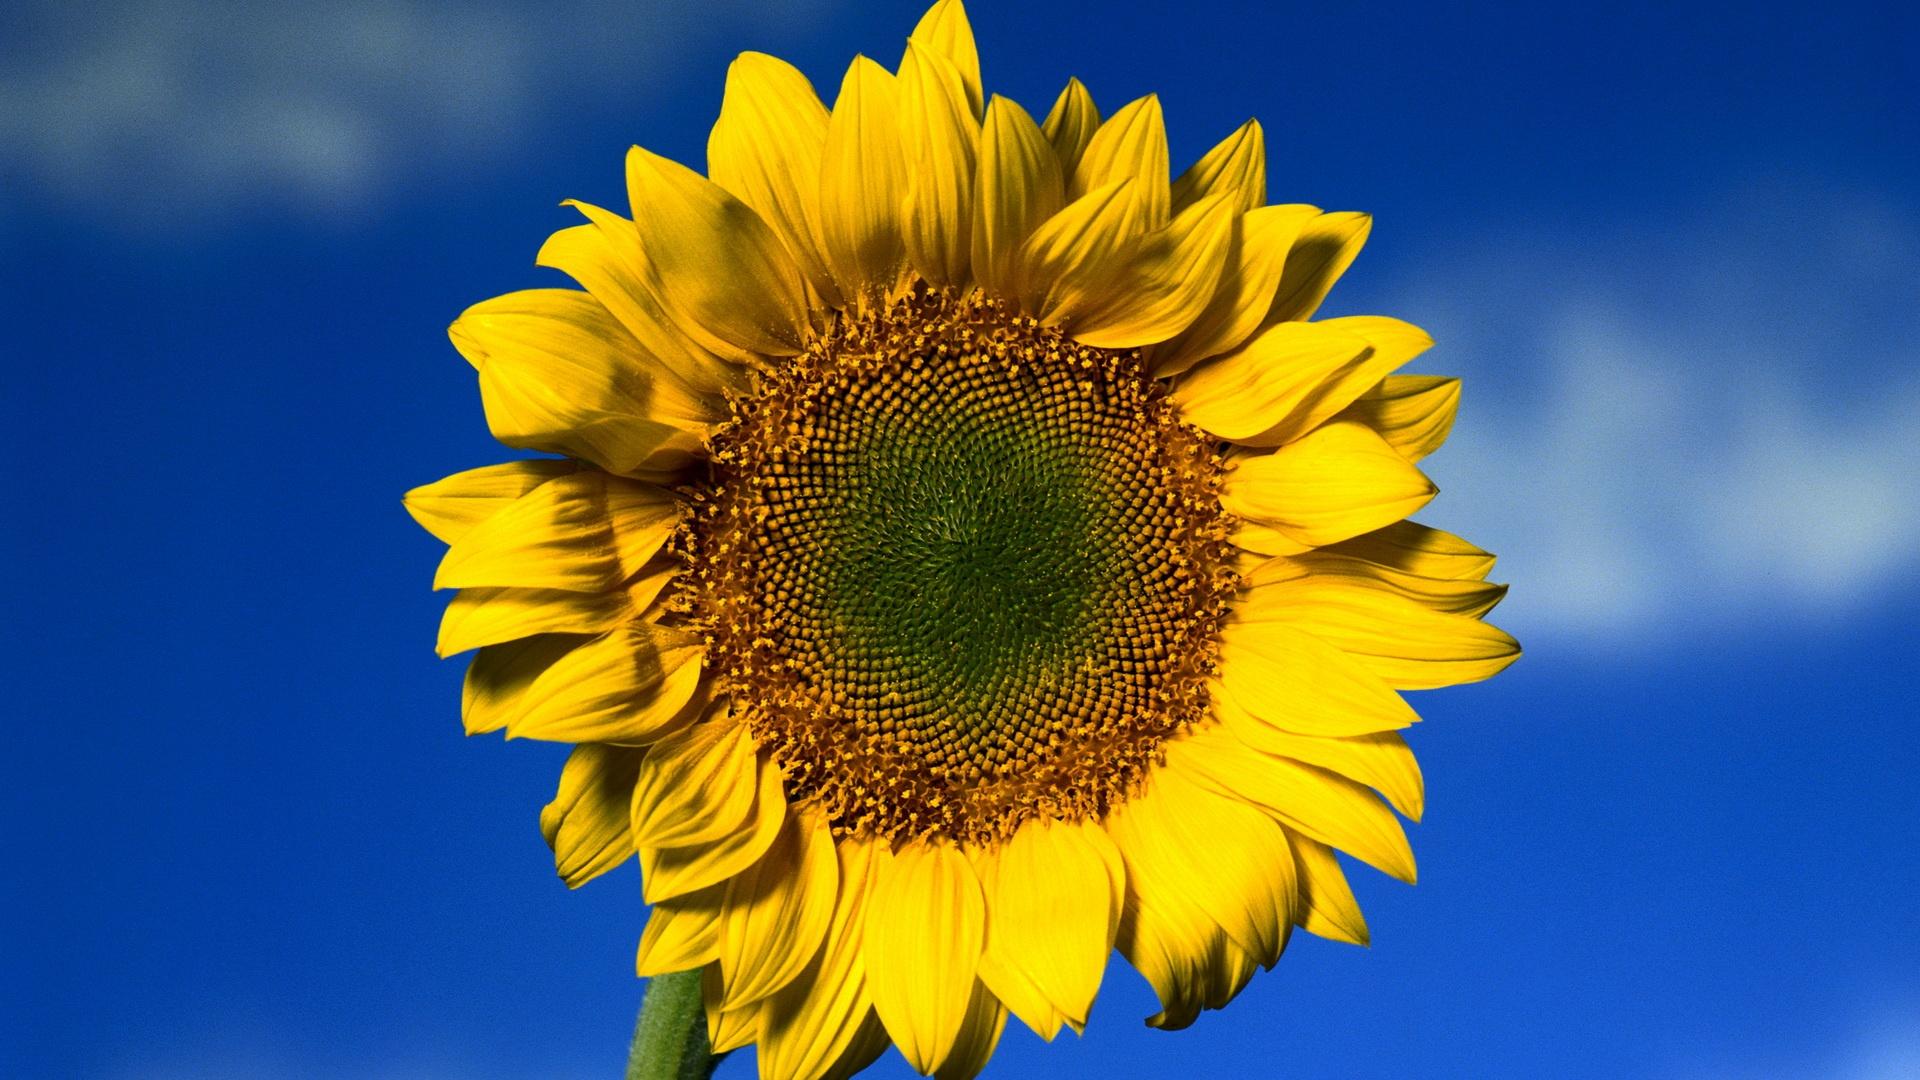 Sunflower HD Wallpaper | Background Image | 1920x1080 | ID ...